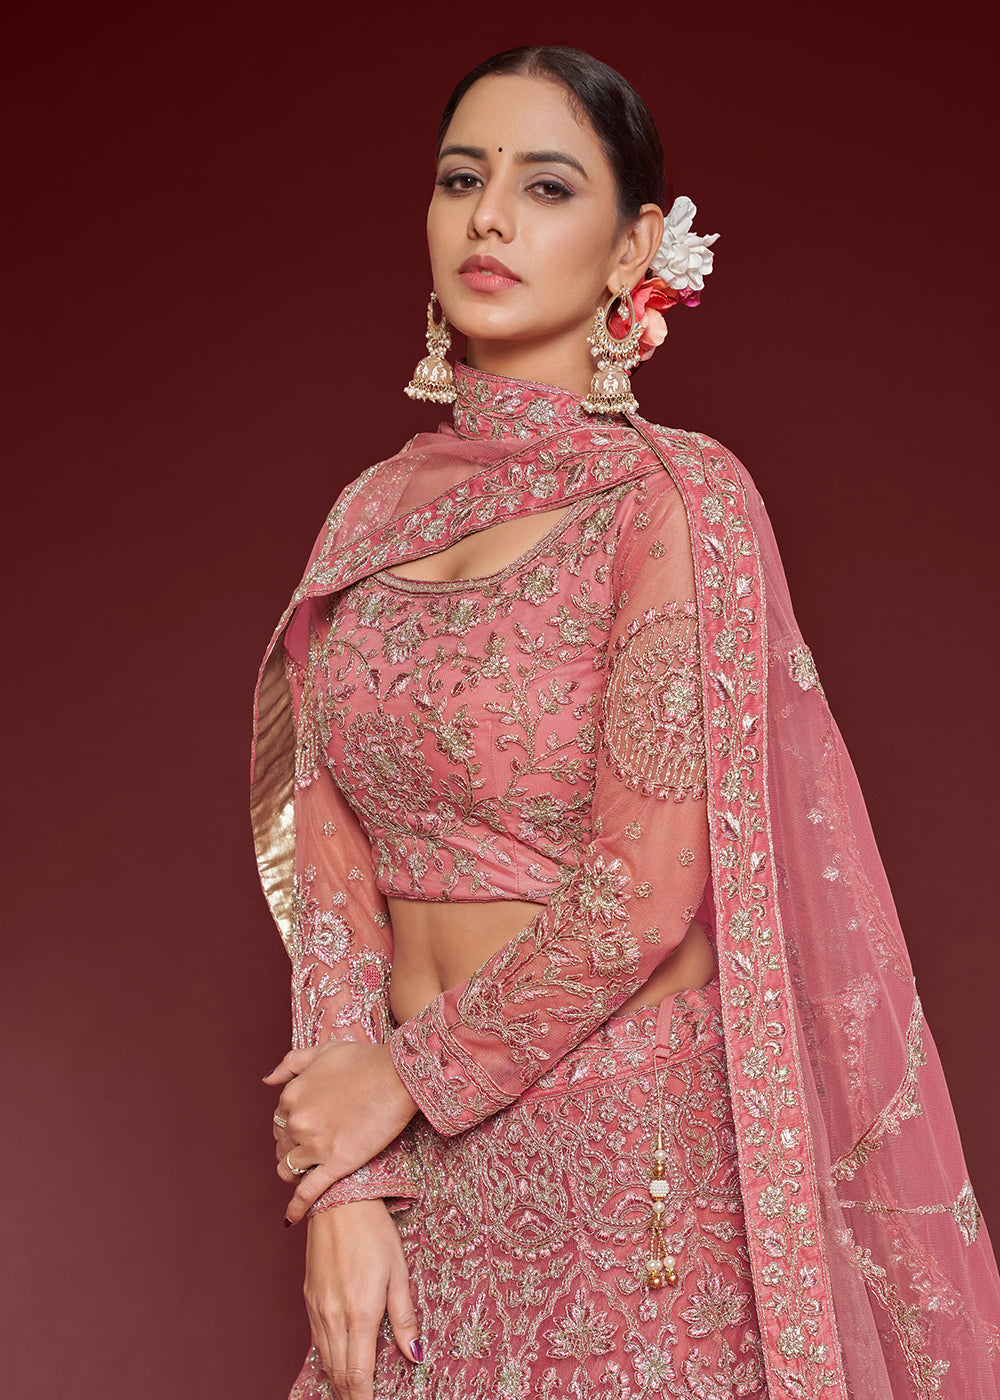 Buy Now Fantacy Pink Embroidered Soft Net Wedding Lehenga Choli Online in USA, UK, Canada & Worldwide at Empress Clothing.